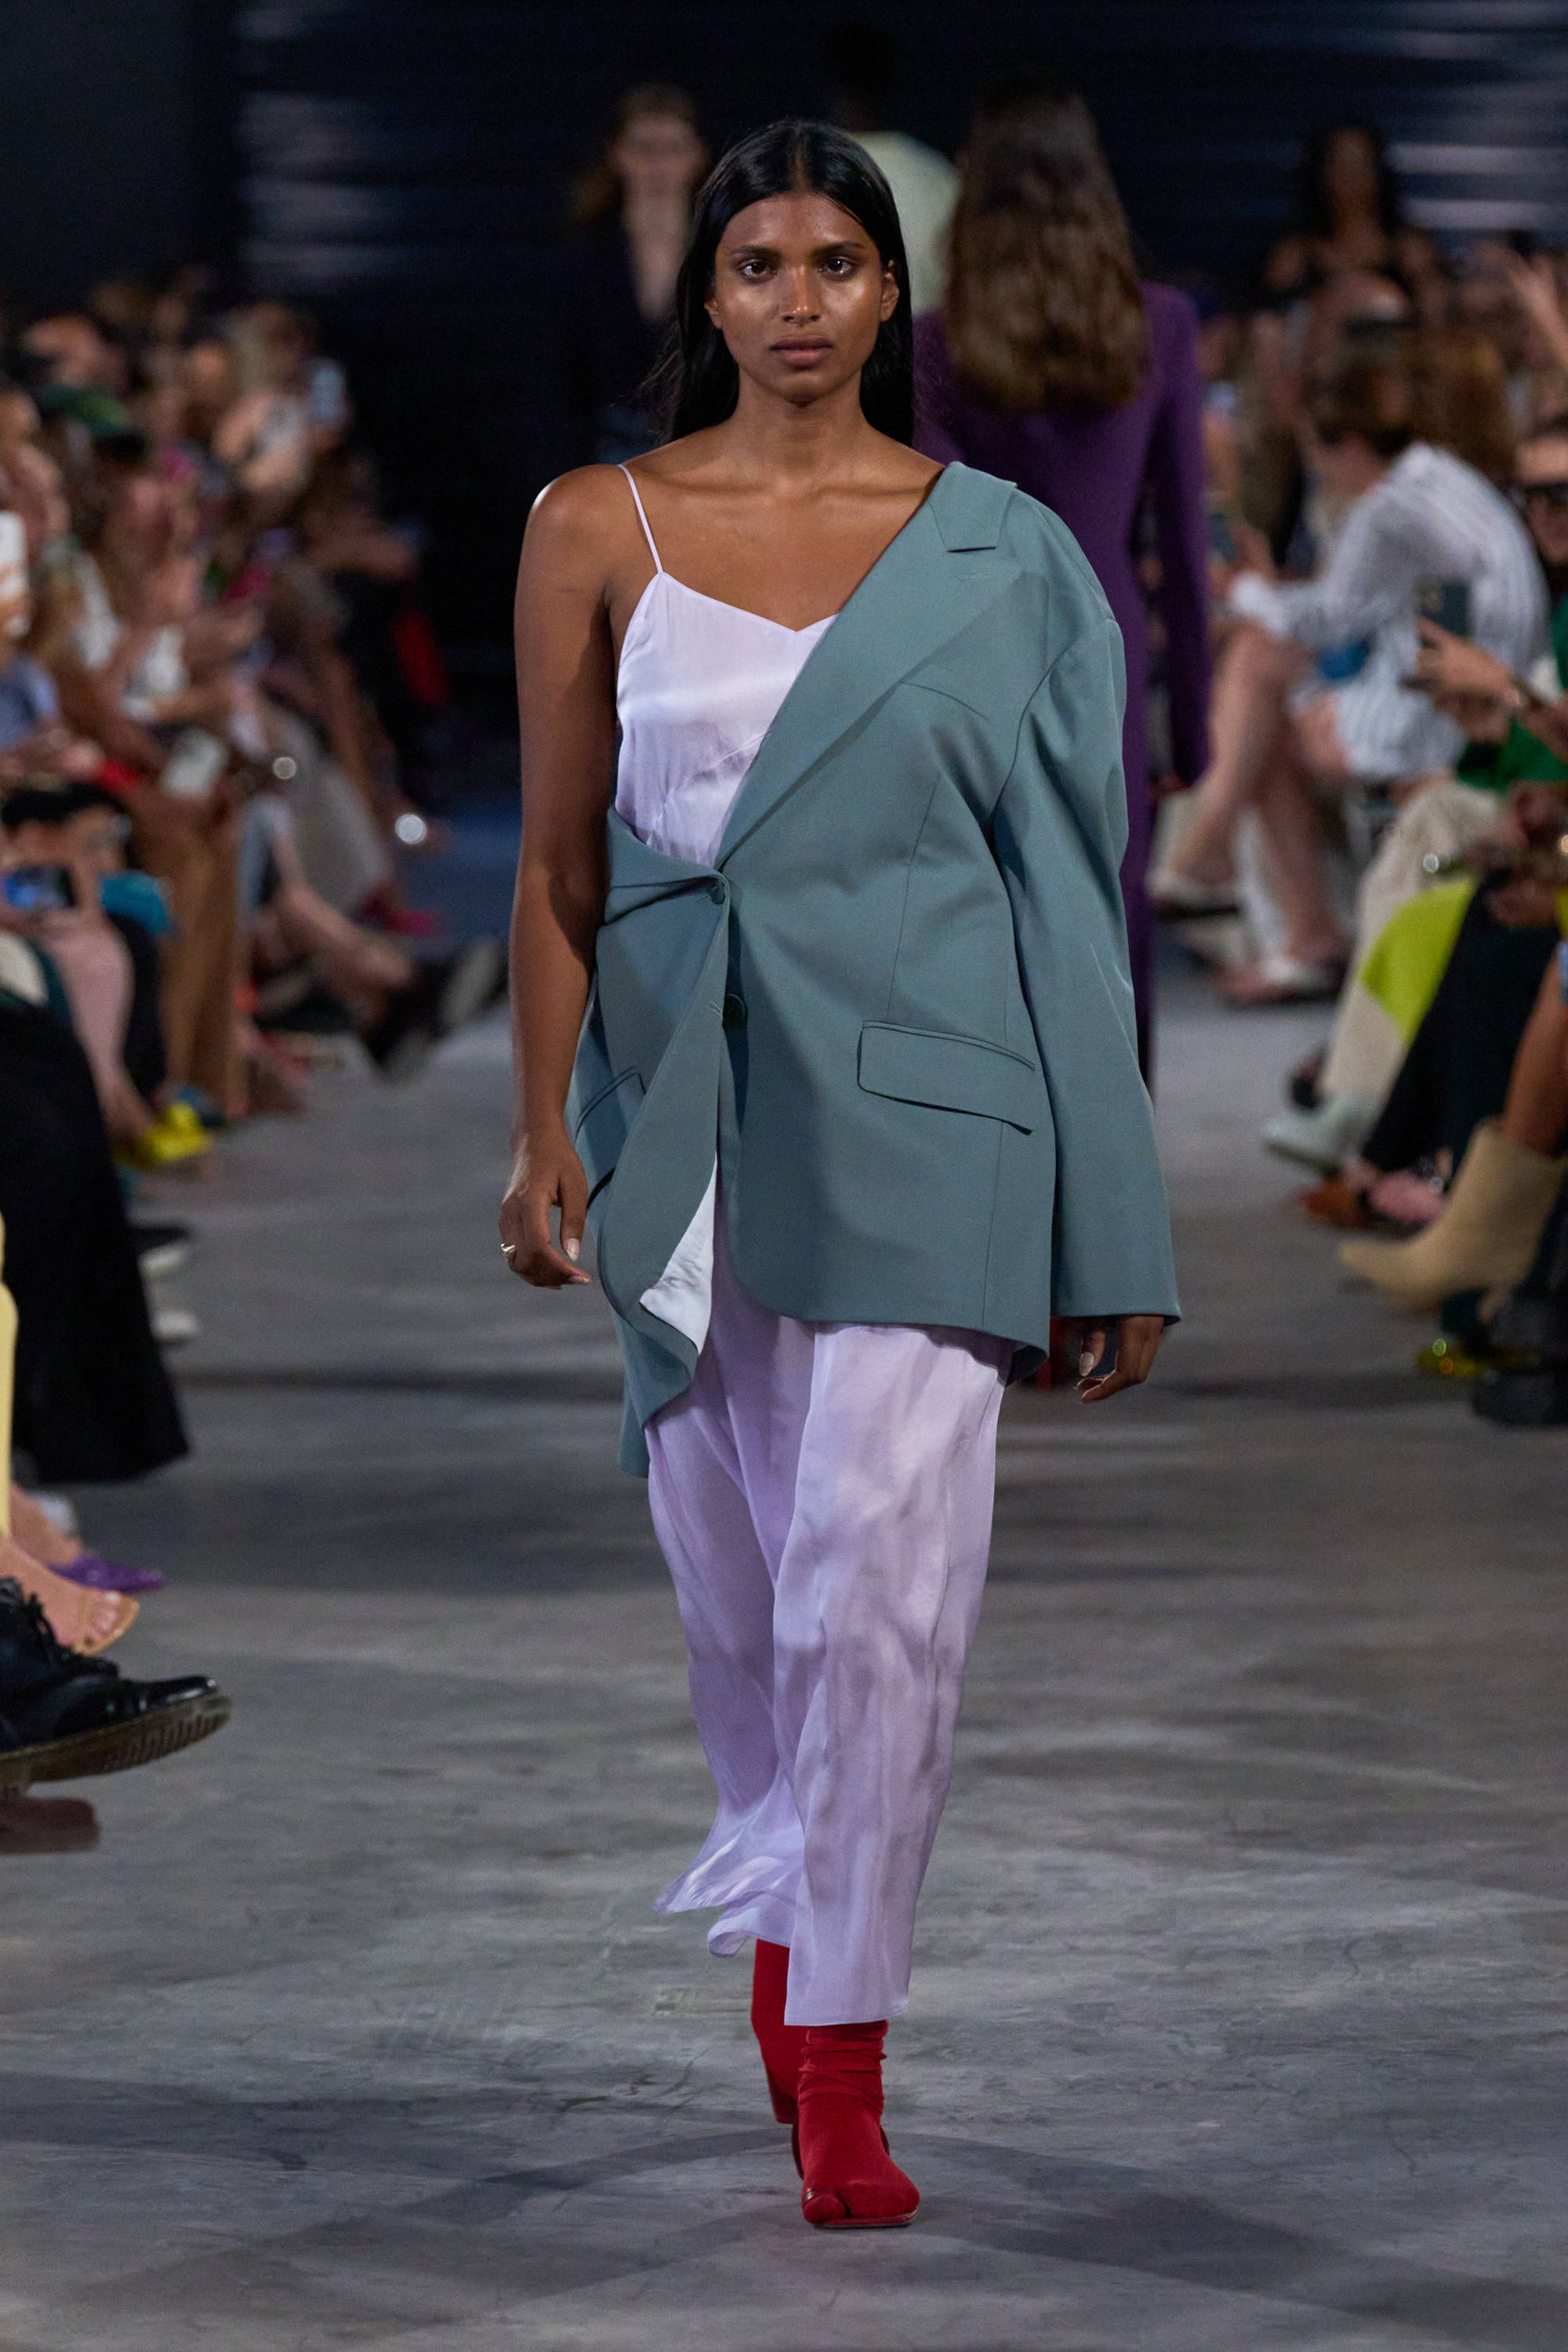 Model on a runway wearing blazer and slip dress